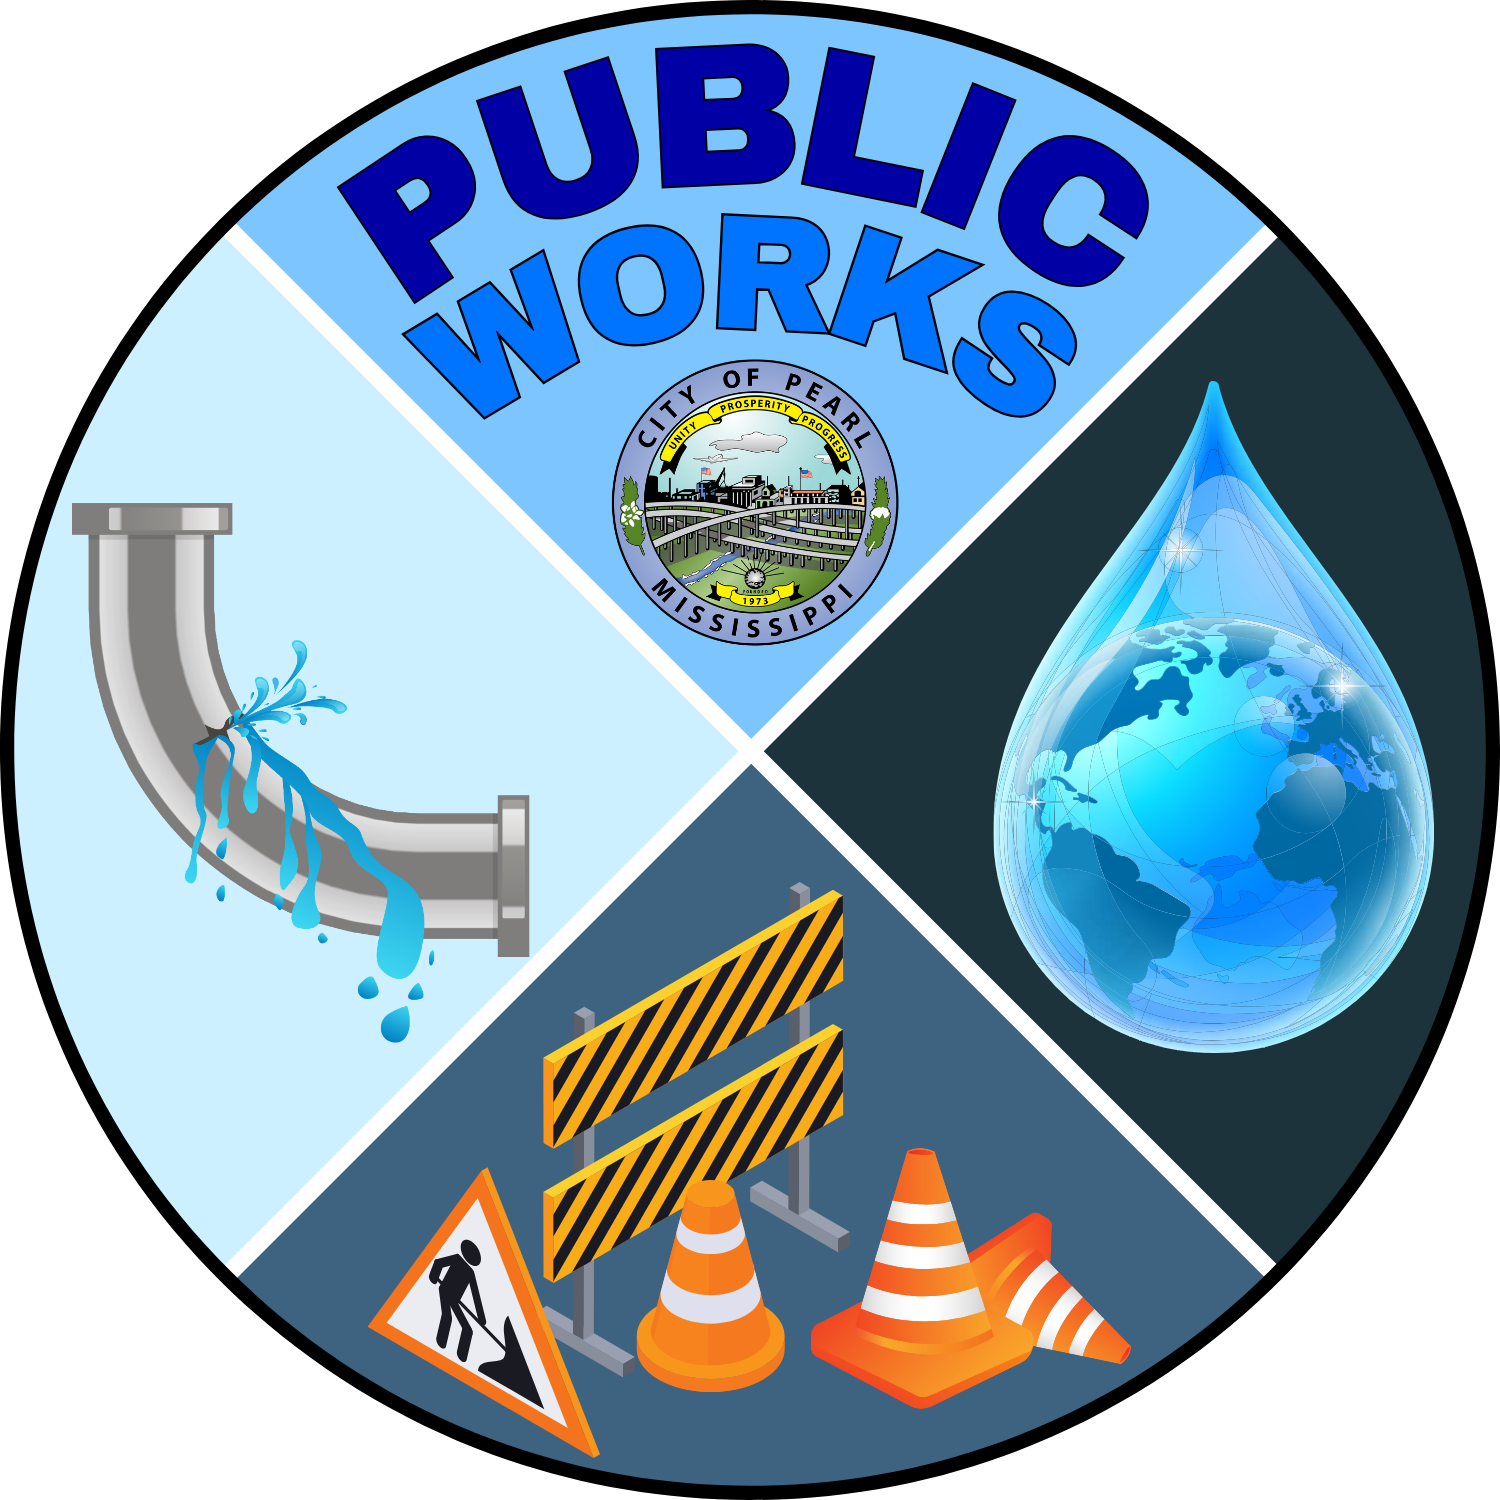 Public Works Icon